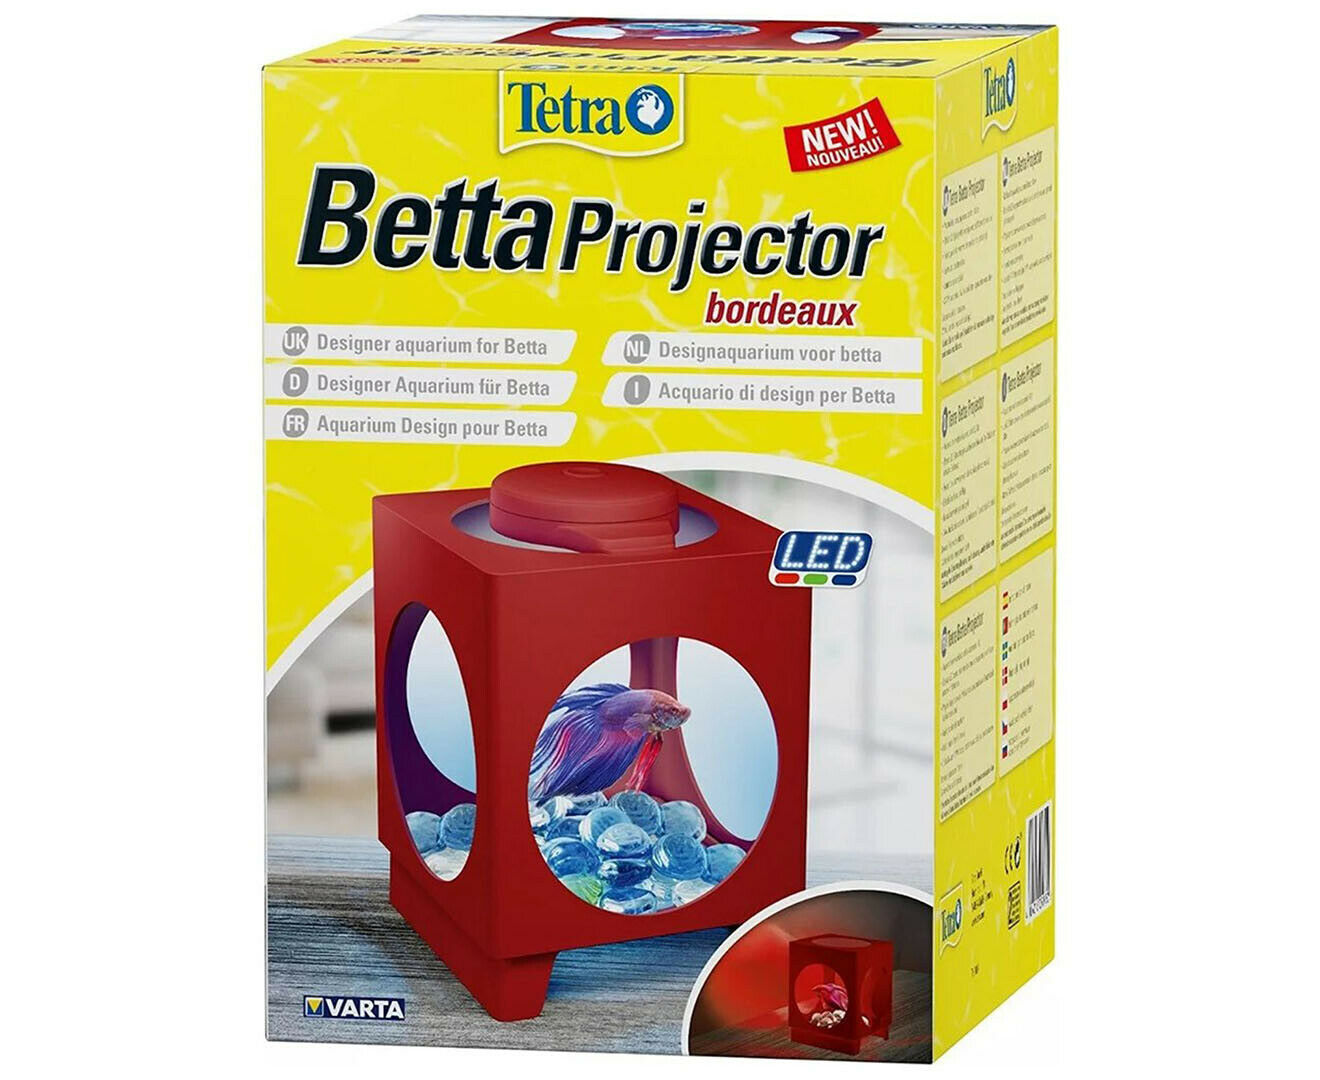 Tetra Betta Projector Bordeaux 1.8L Tank 